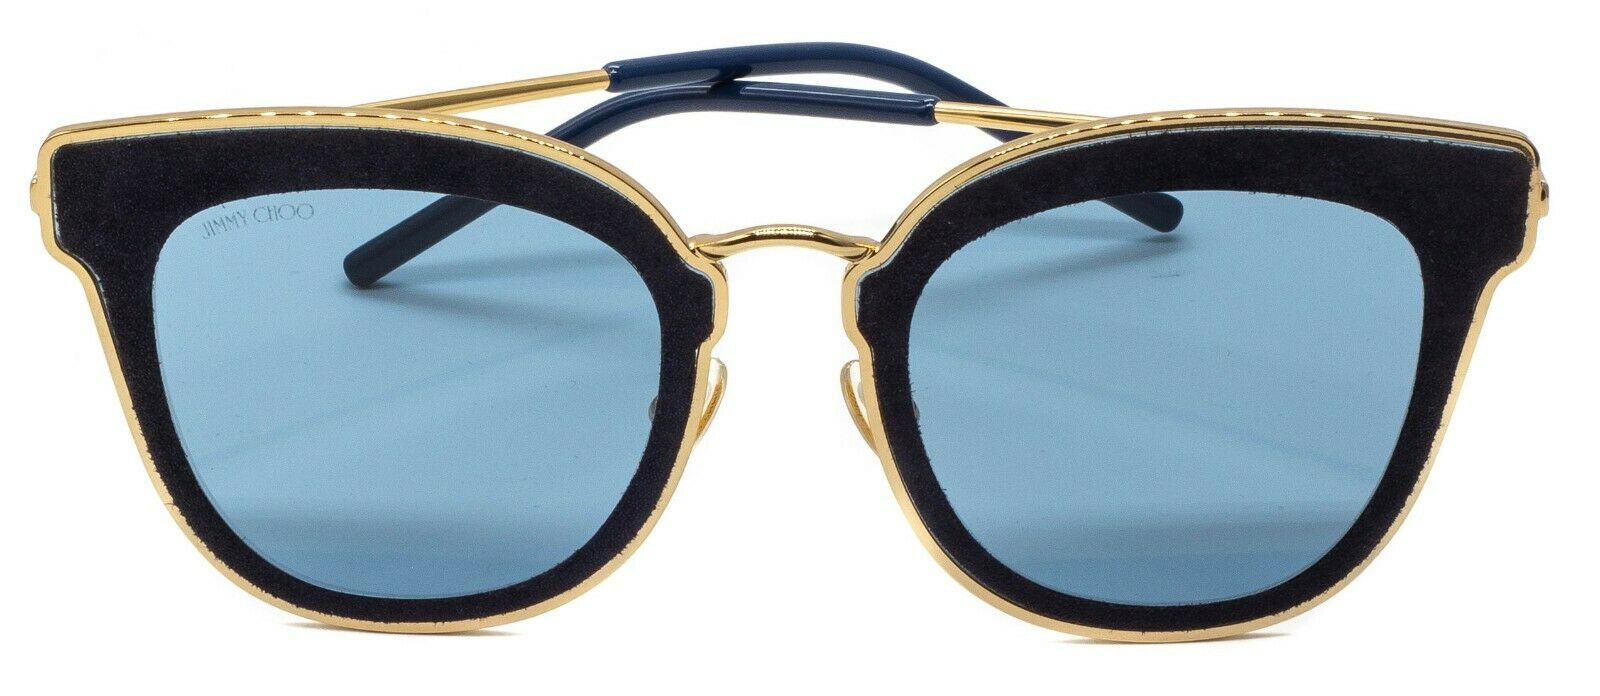 JIMMY CHOO NILE/S LKSA9 63mm Sunglasses Shades Frames Eyewear New BNIB - ITALY